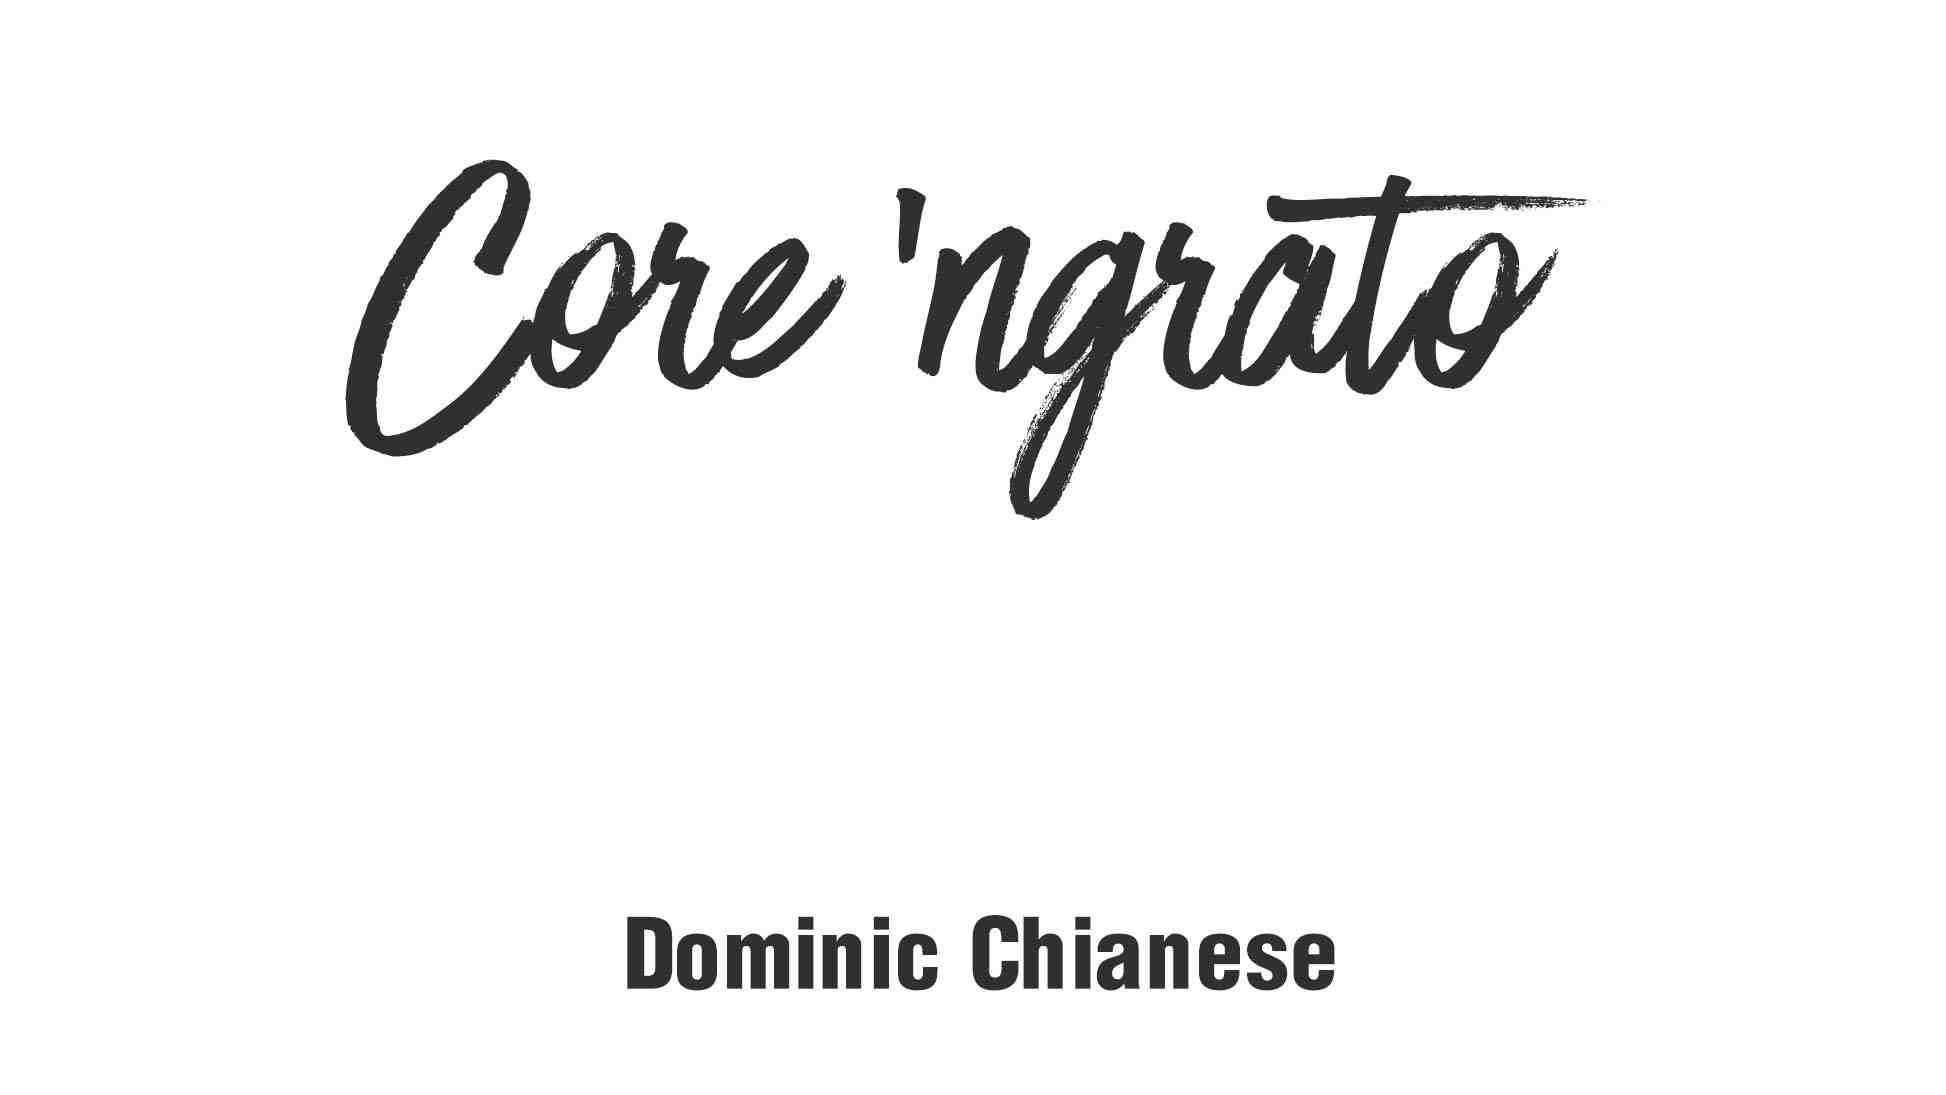 Core 'ngrato Dominic Chianese